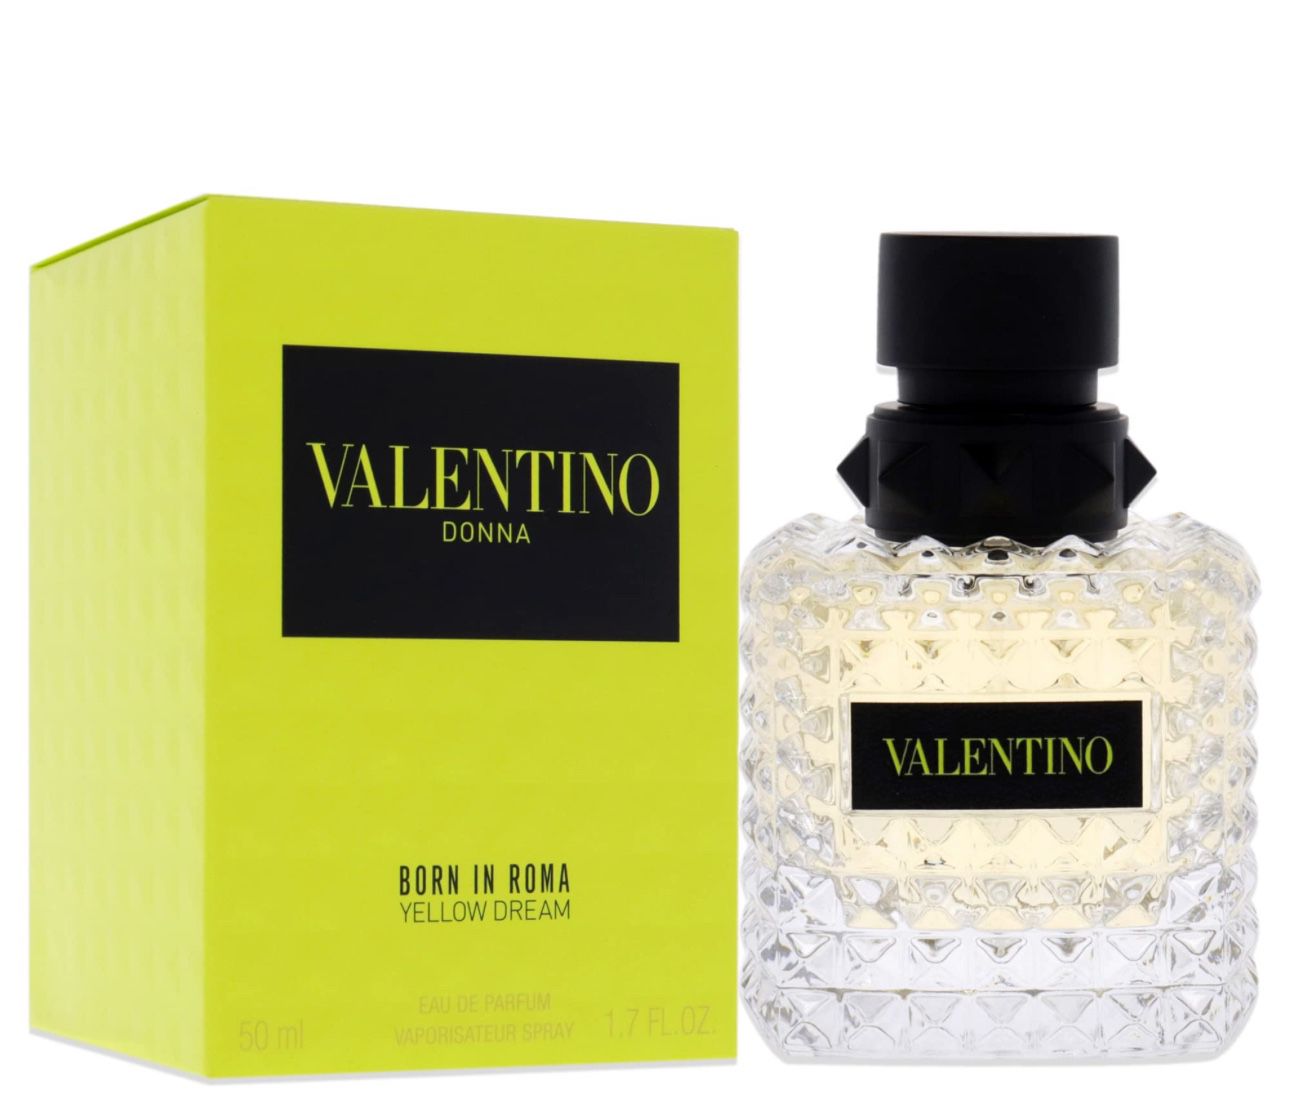 Valentino Perfume